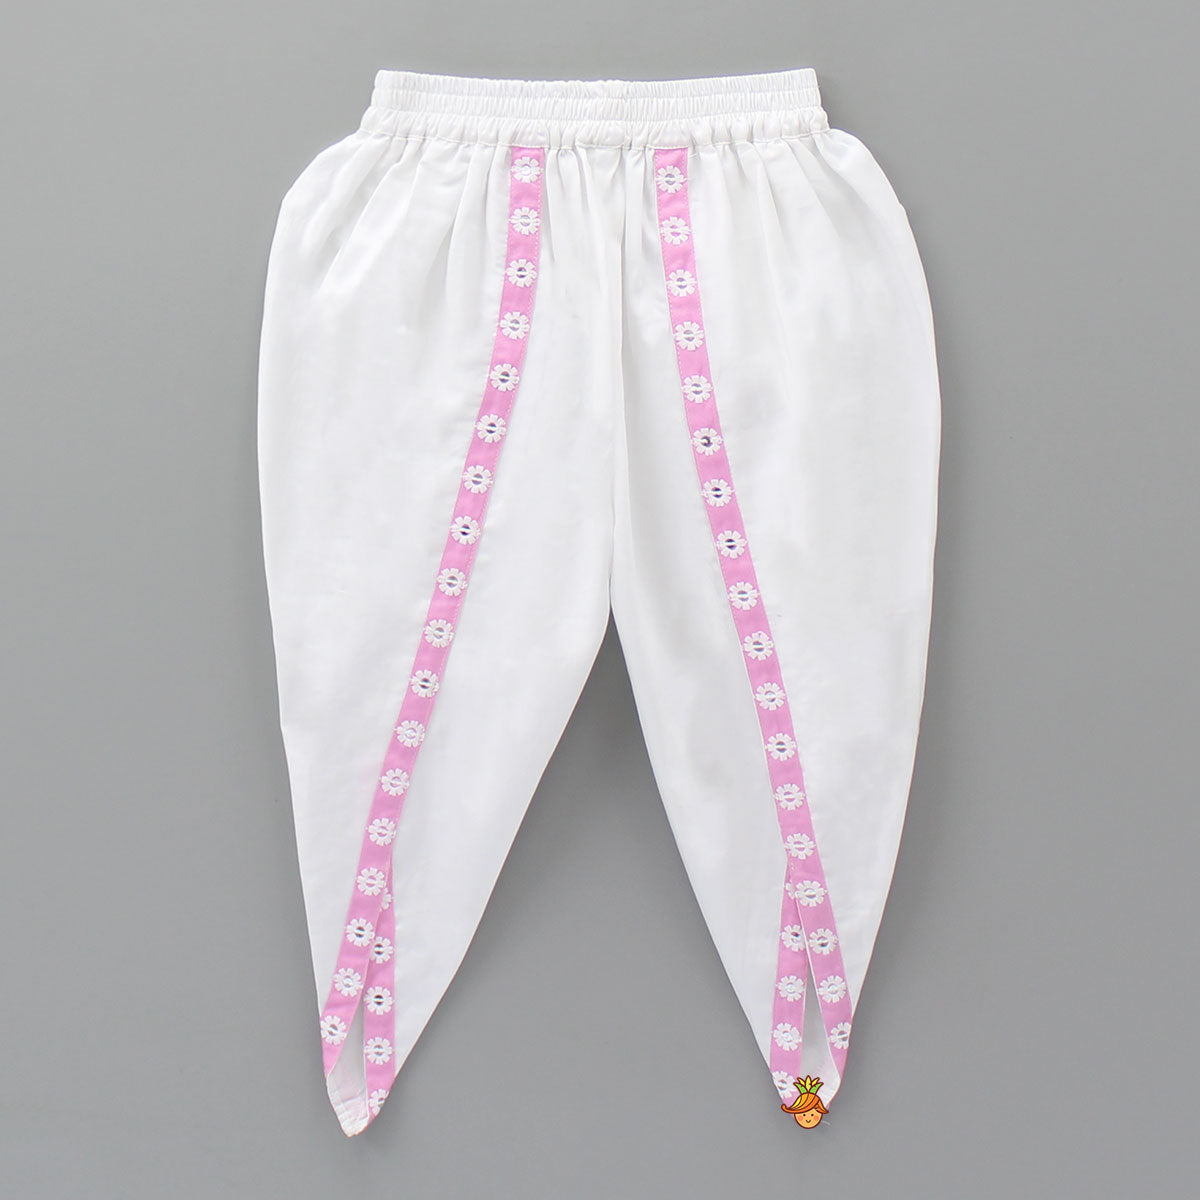 Elegant Pink Kurti And Dhoti Pant With Net Dupatta